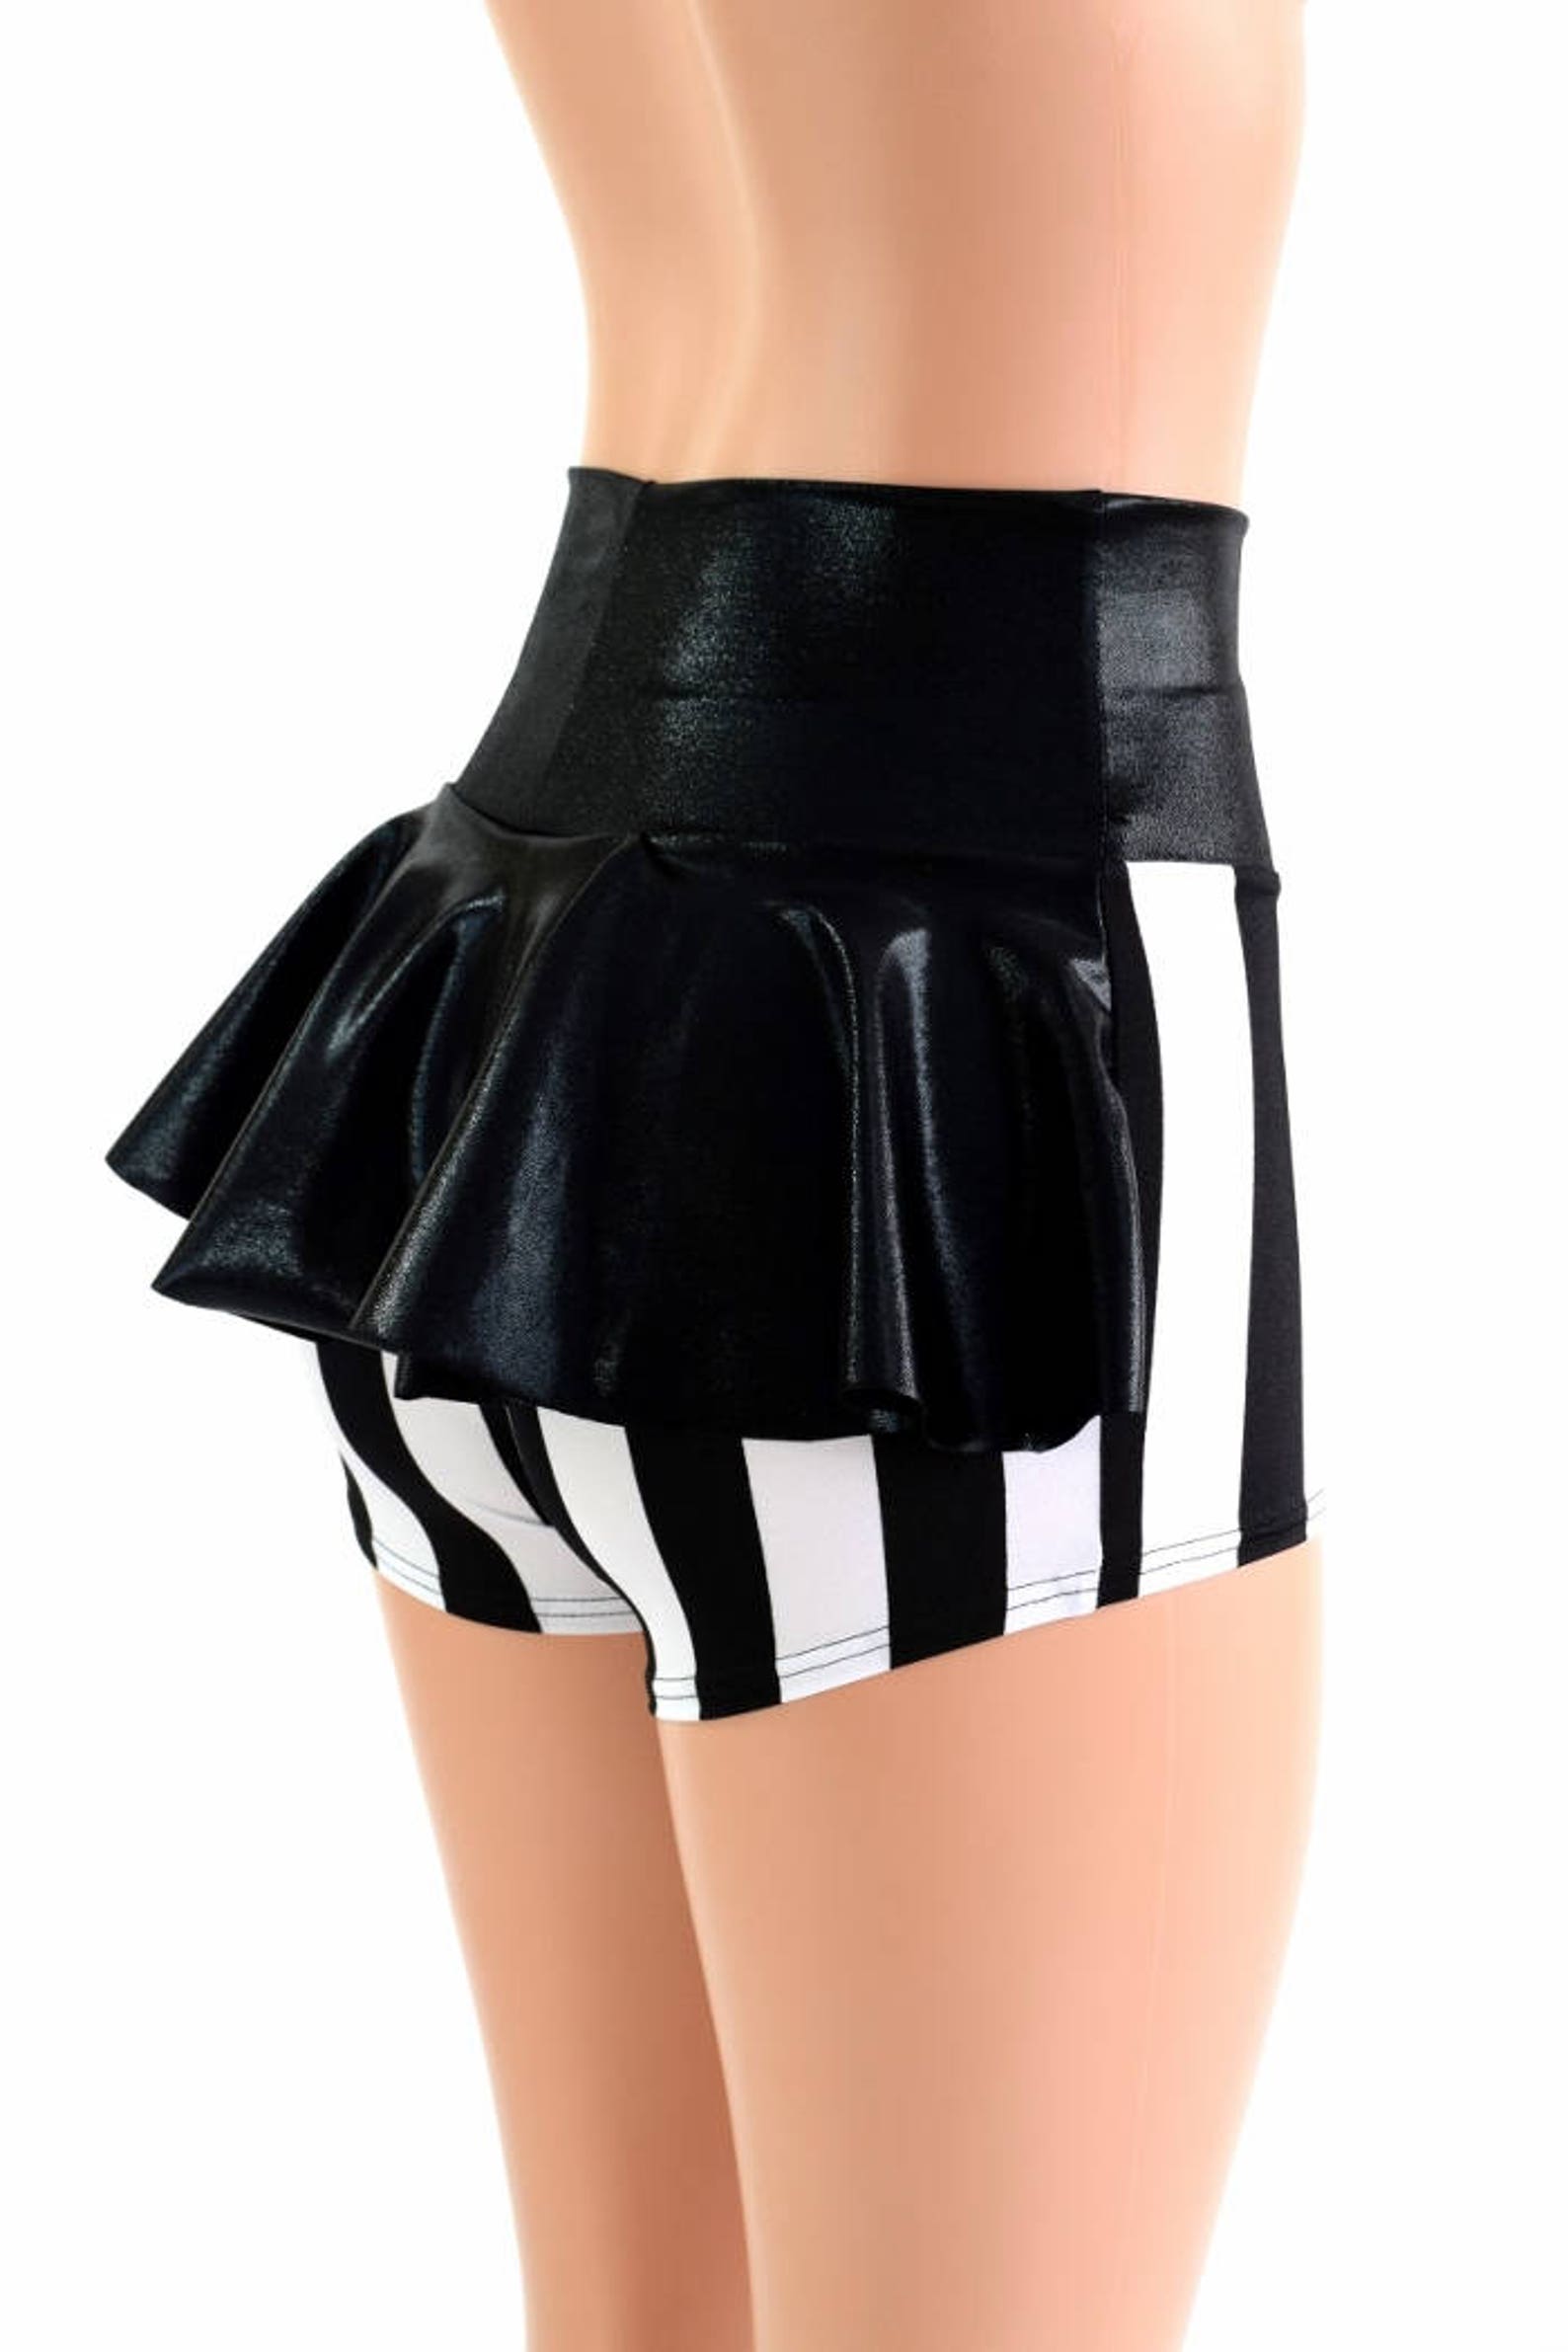 Black & White Stripe High Waist Ruffle Rump Shorts W/black - Etsy